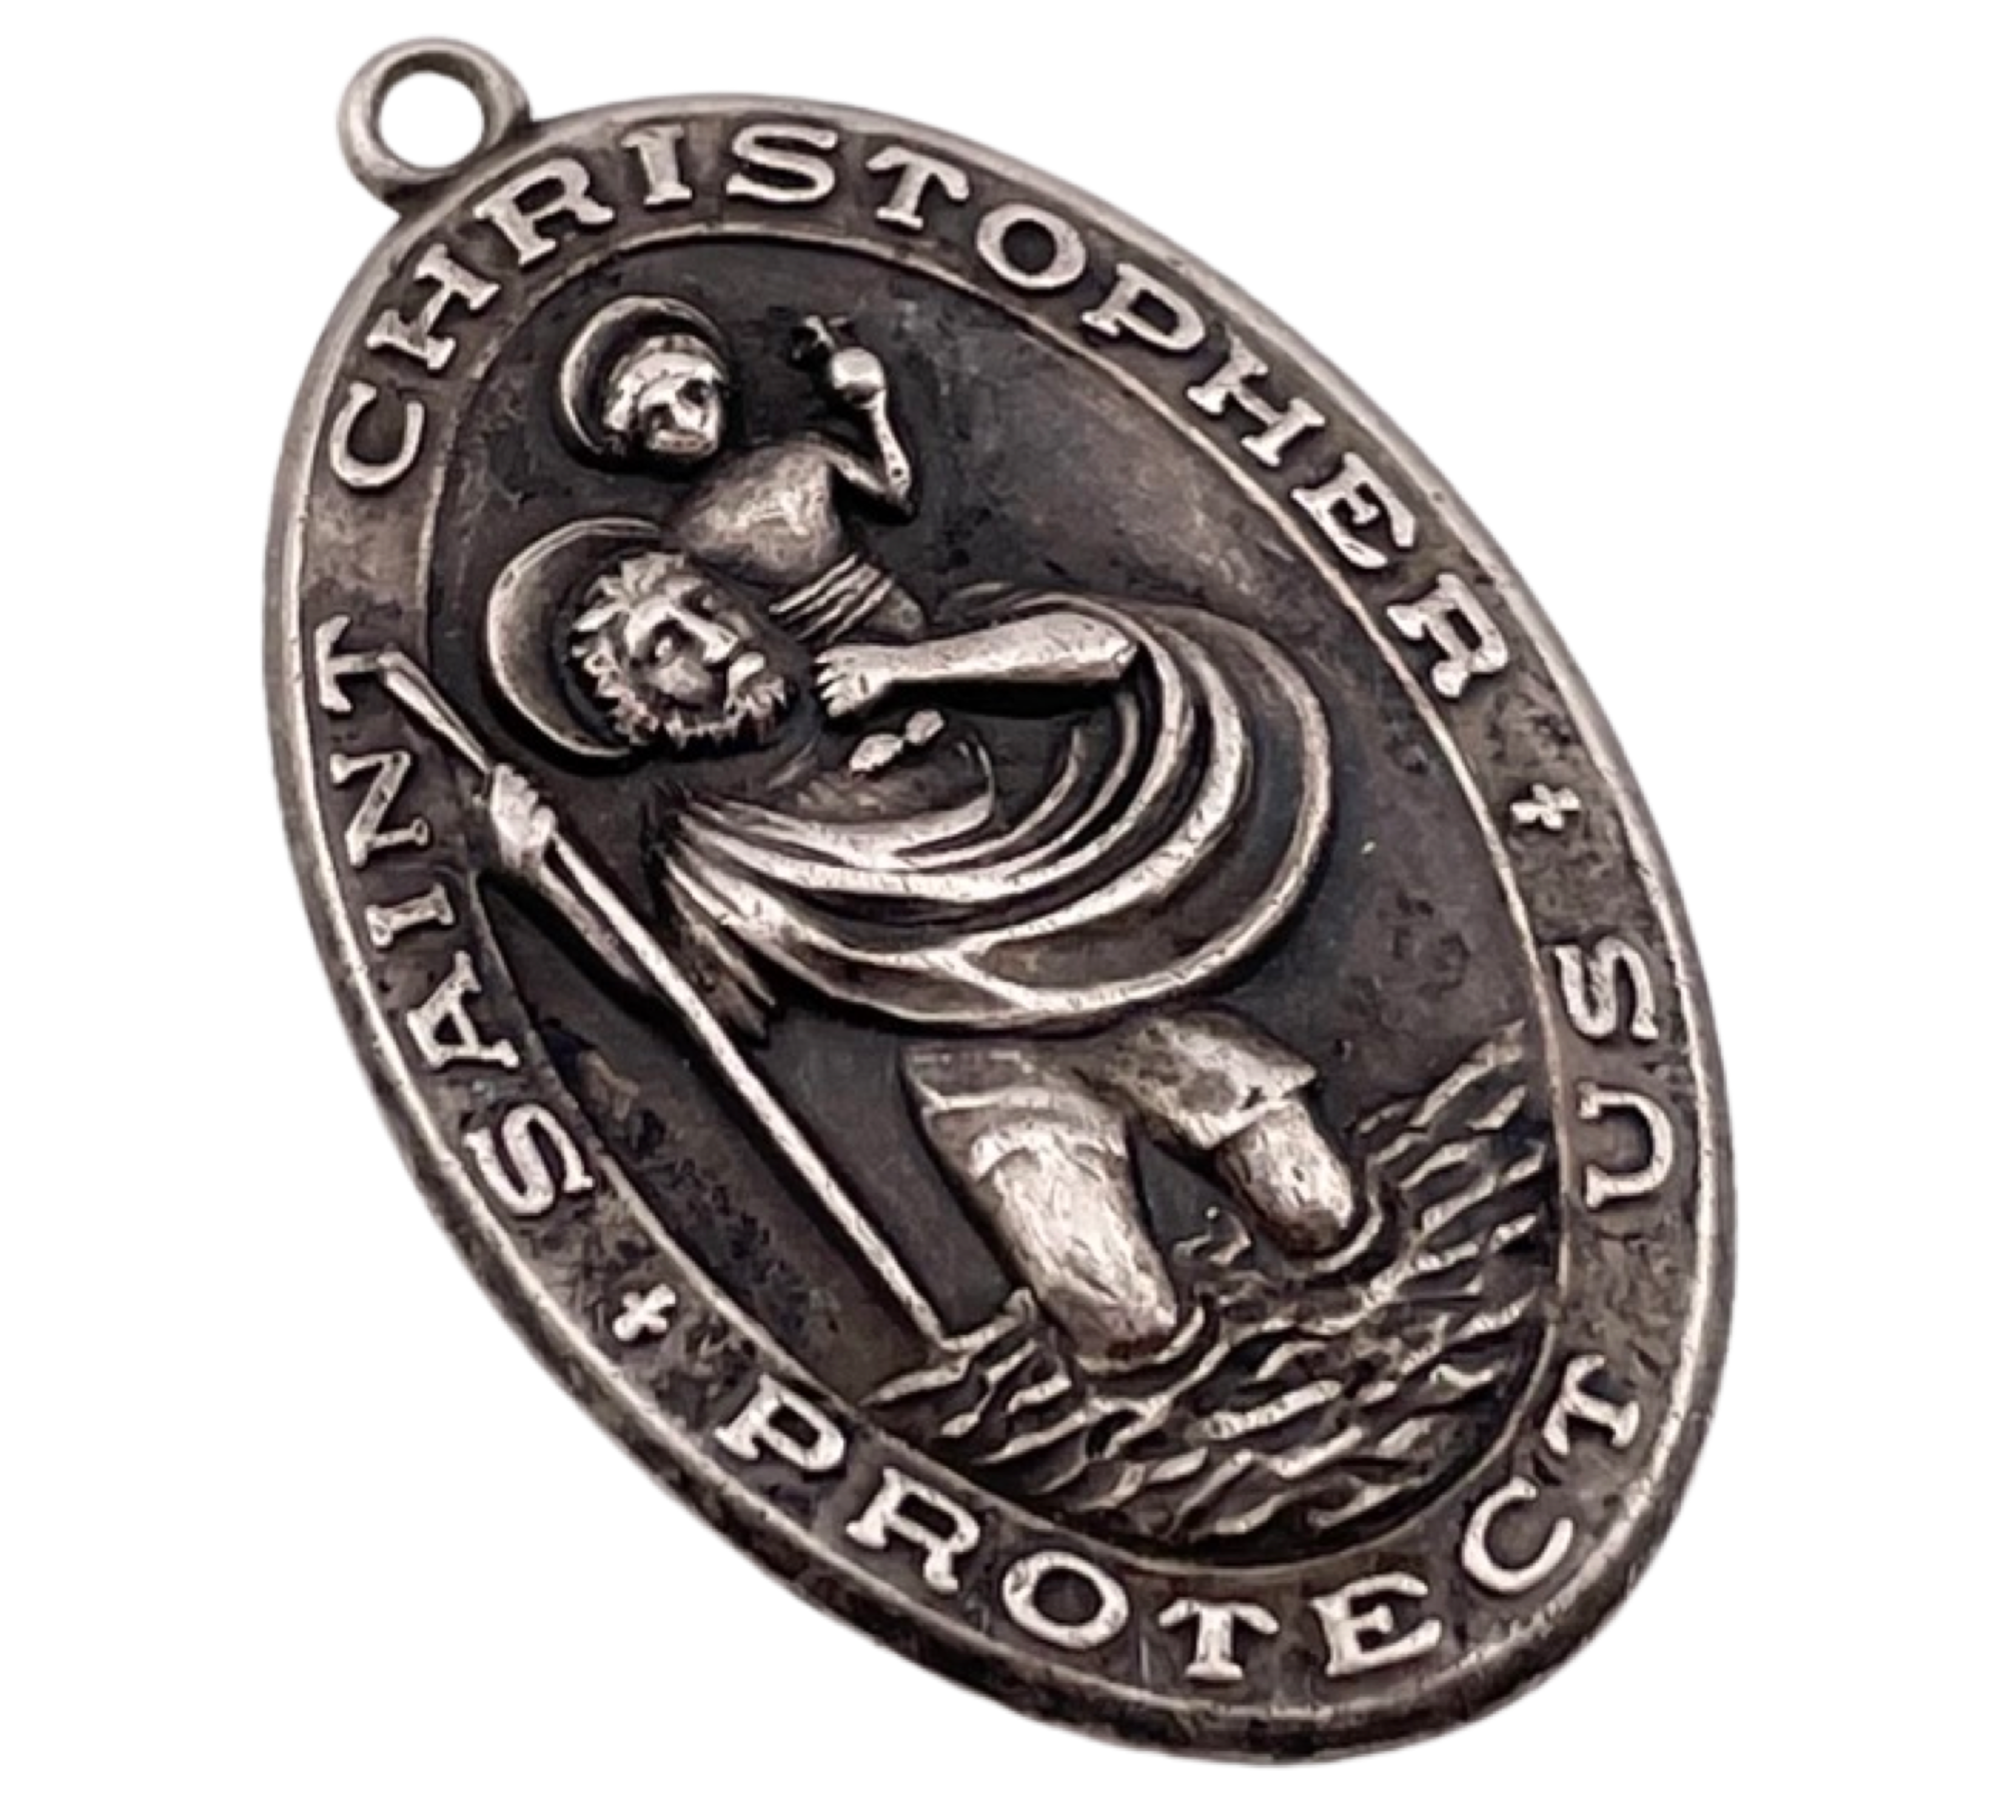 sterling silver religious Saint Christopher pendant